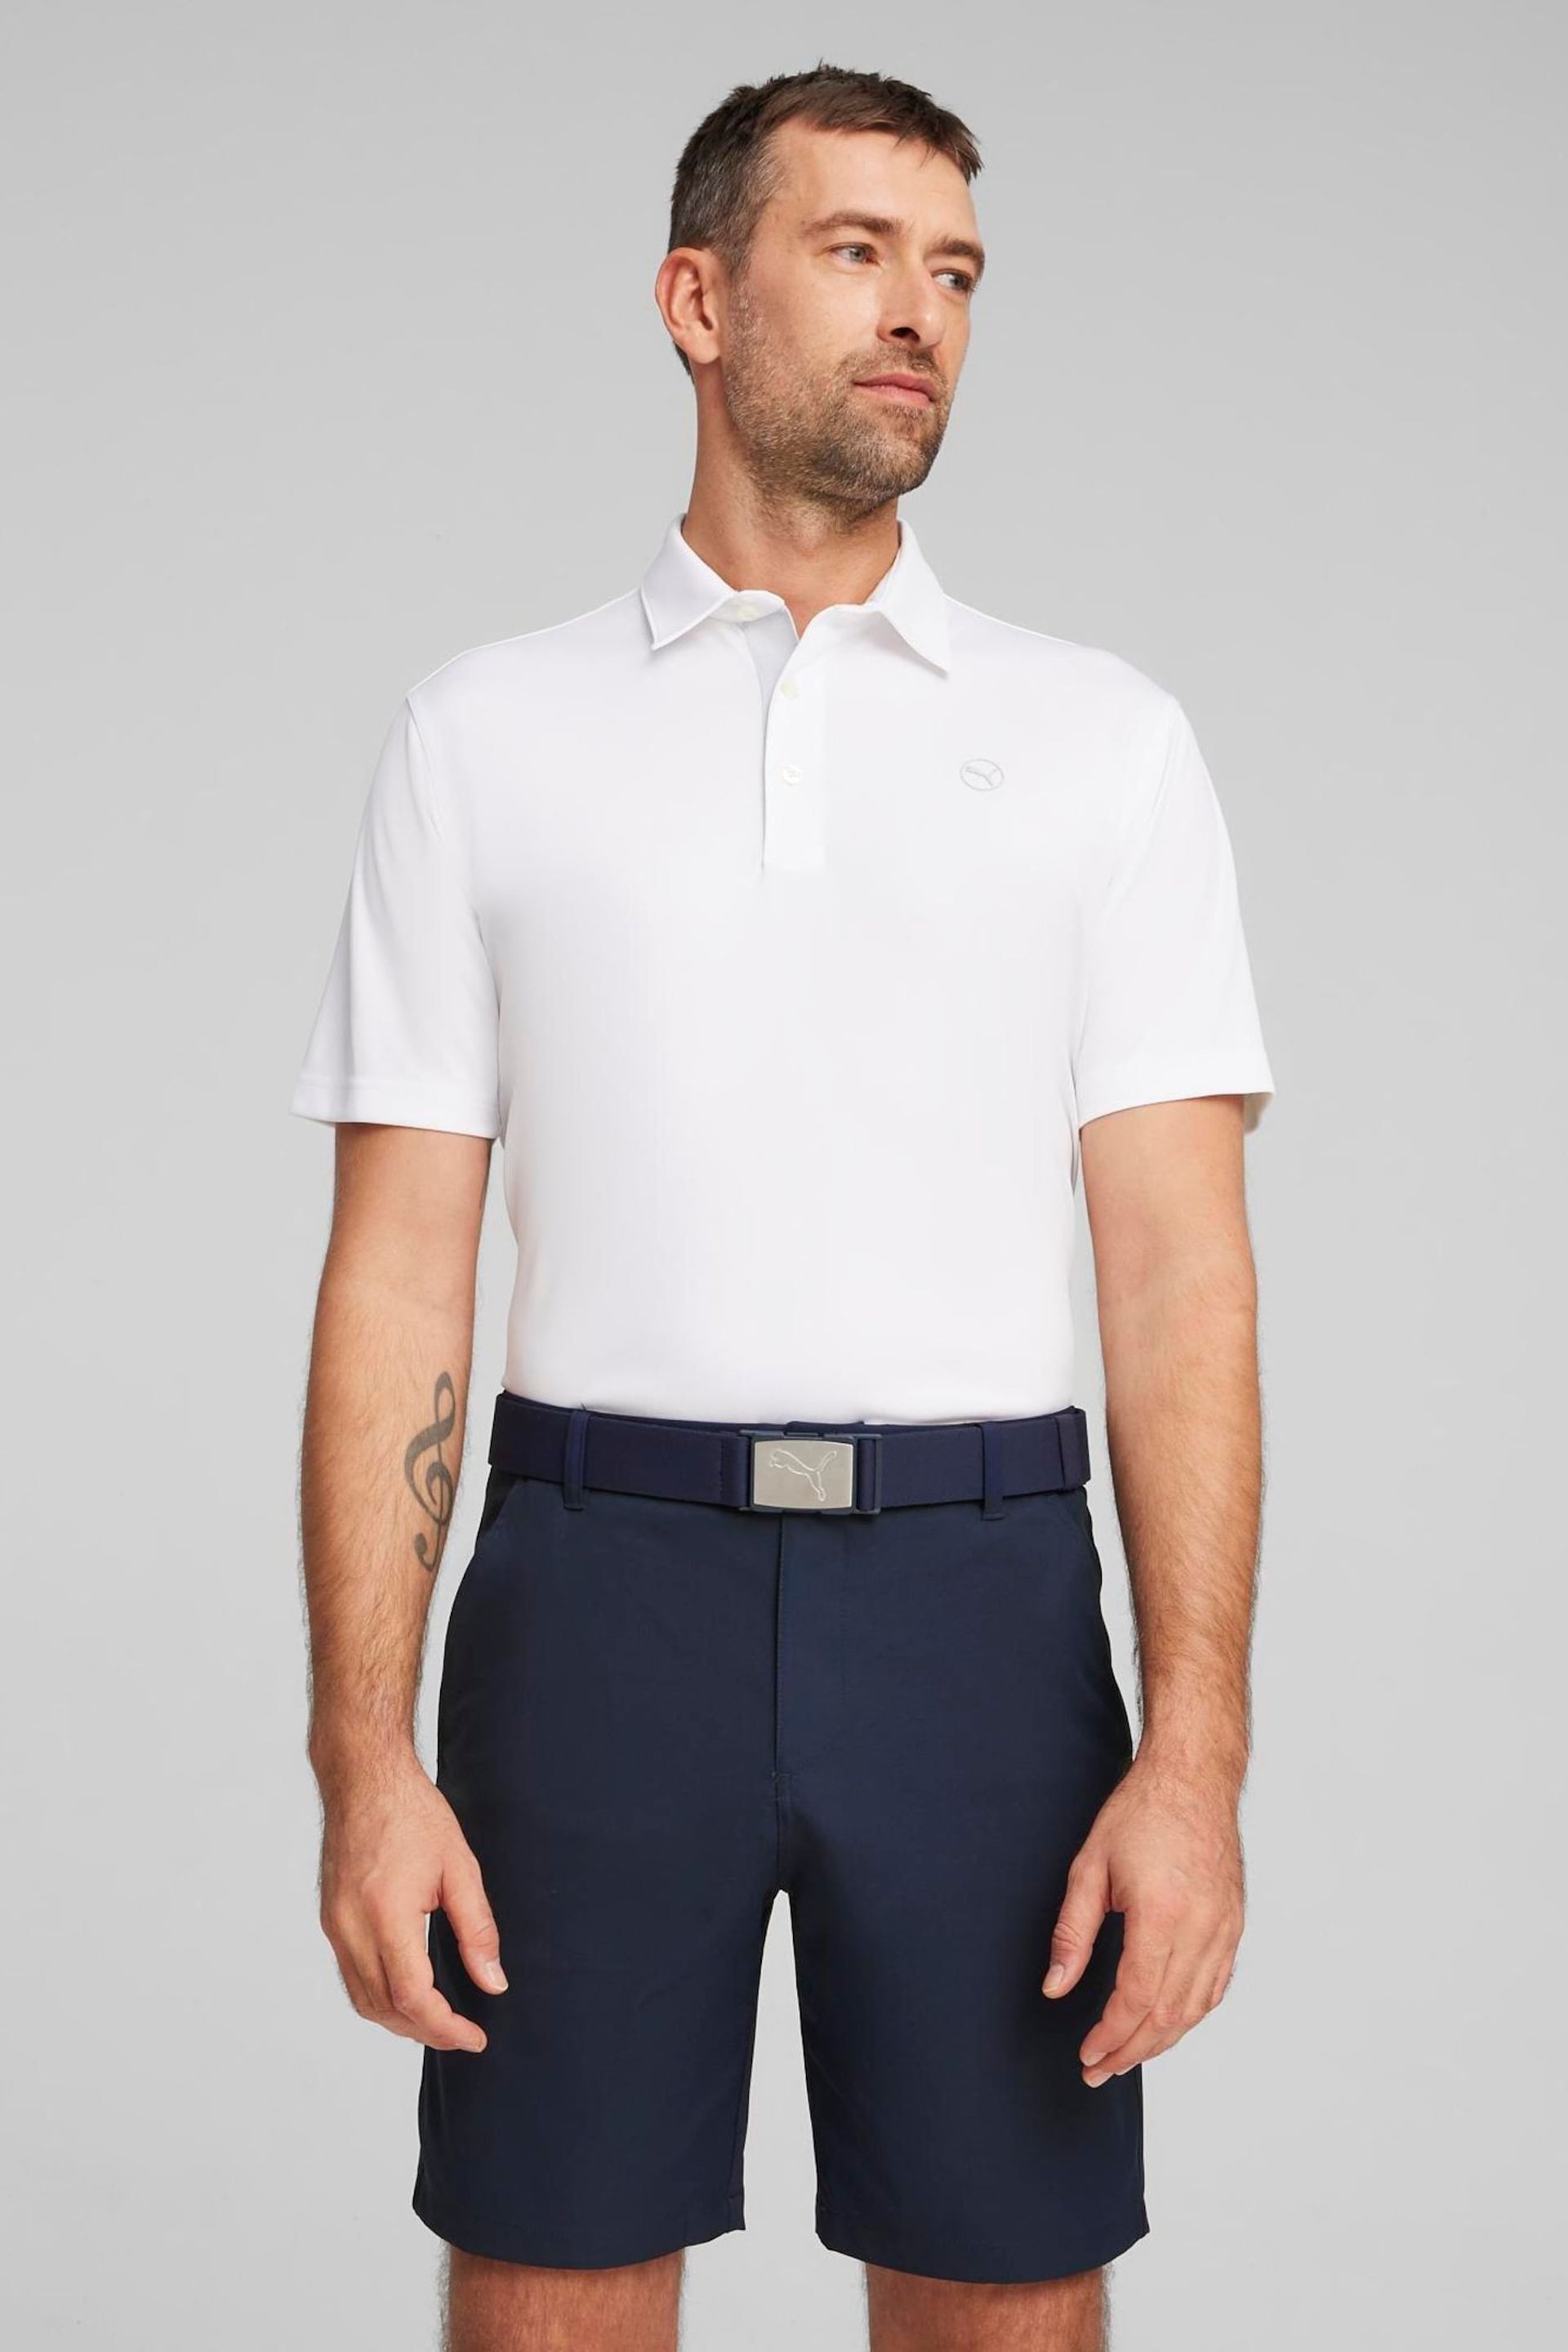 Puma White Pure Solid Golf Mens Polo Shirt - Image 2 of 4